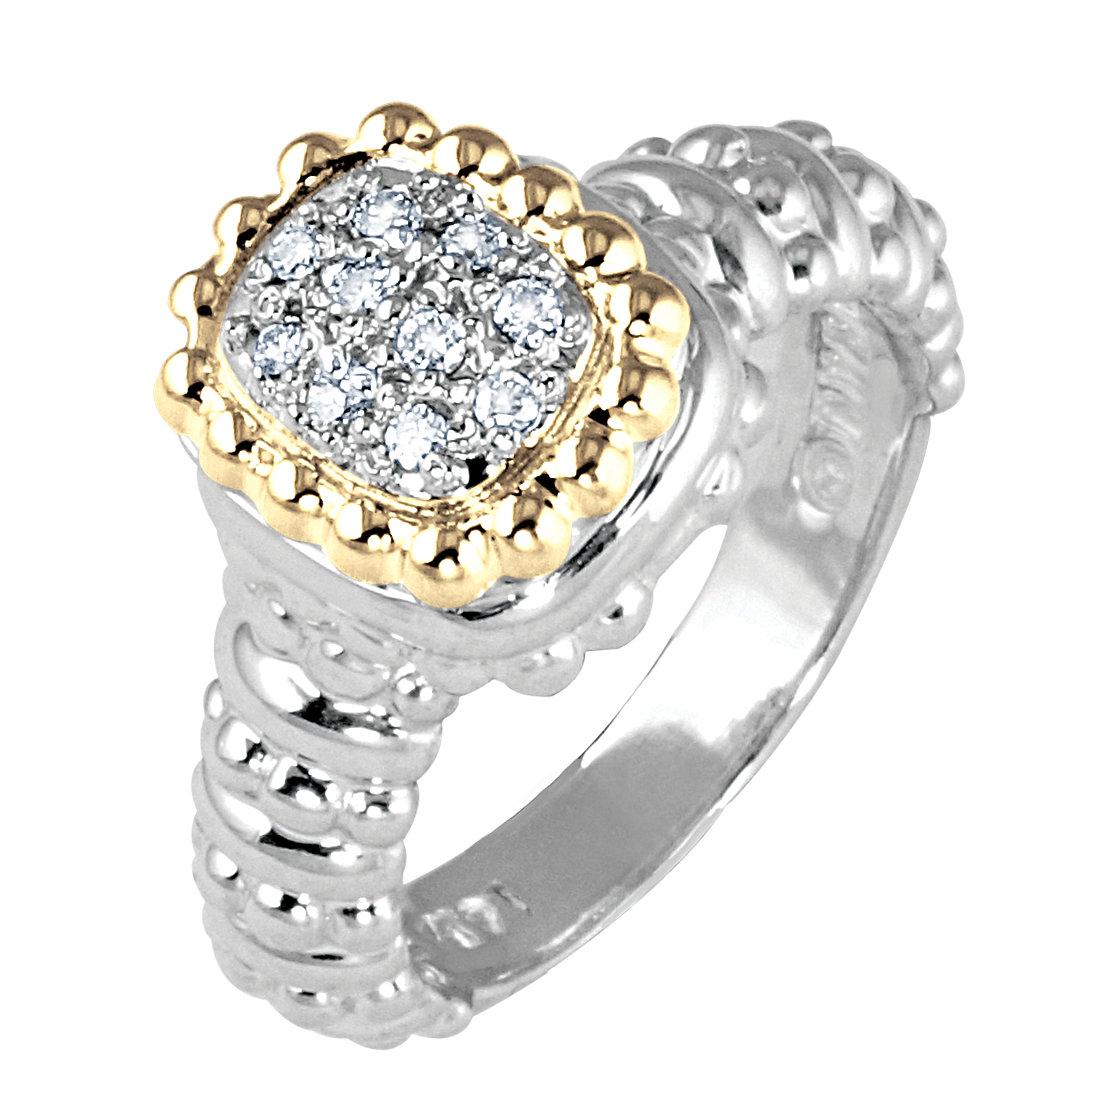 Vahan Sterling Silver & Yellow Gold Diamond Fashion Ring Javeri Jewelers Inc Frisco, TX